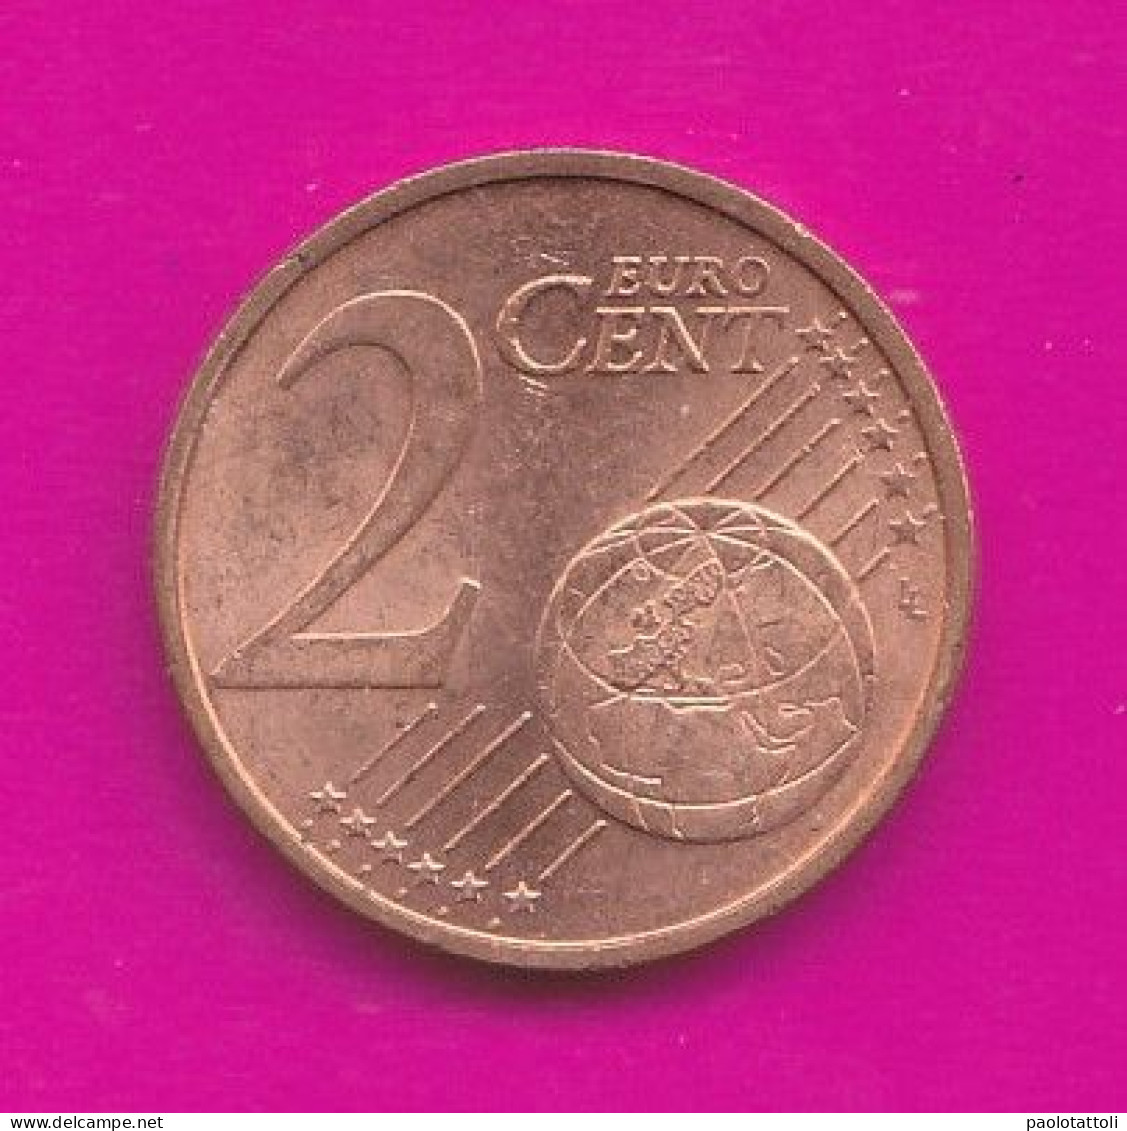 Germany, D 2016- 2 Euro Cent- Nickel Brass- Obverse Oak Leaf. Reverse Denomination- SPL, EF, SUP, VZ- - Germany